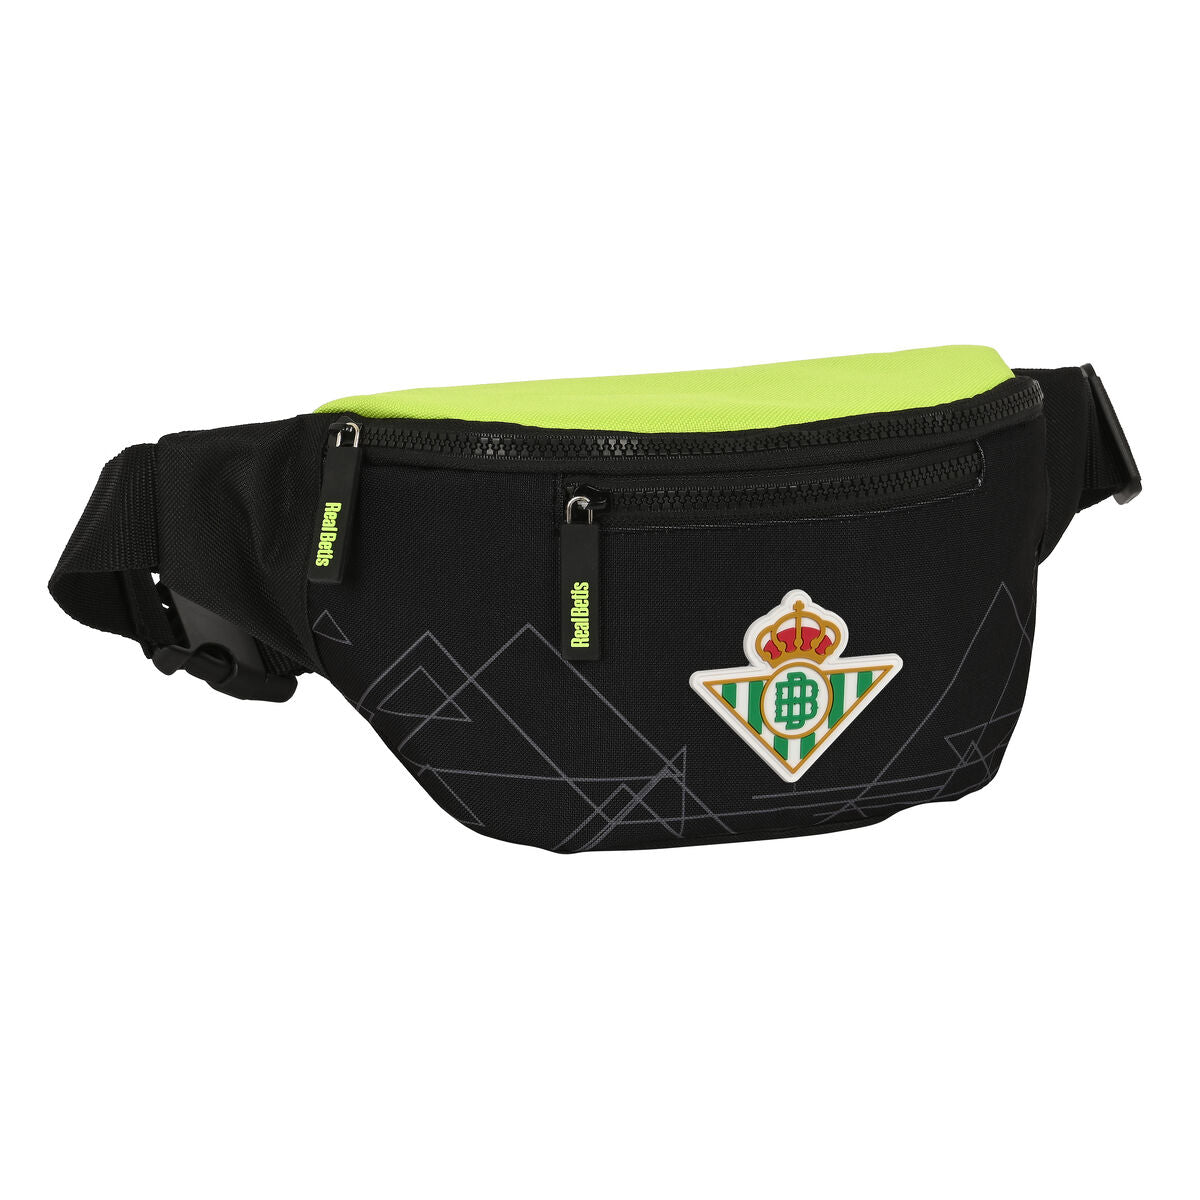 Laukku Real Betis Balompié Musta Lime väri Urheilu 23 x 12 x 9 cm